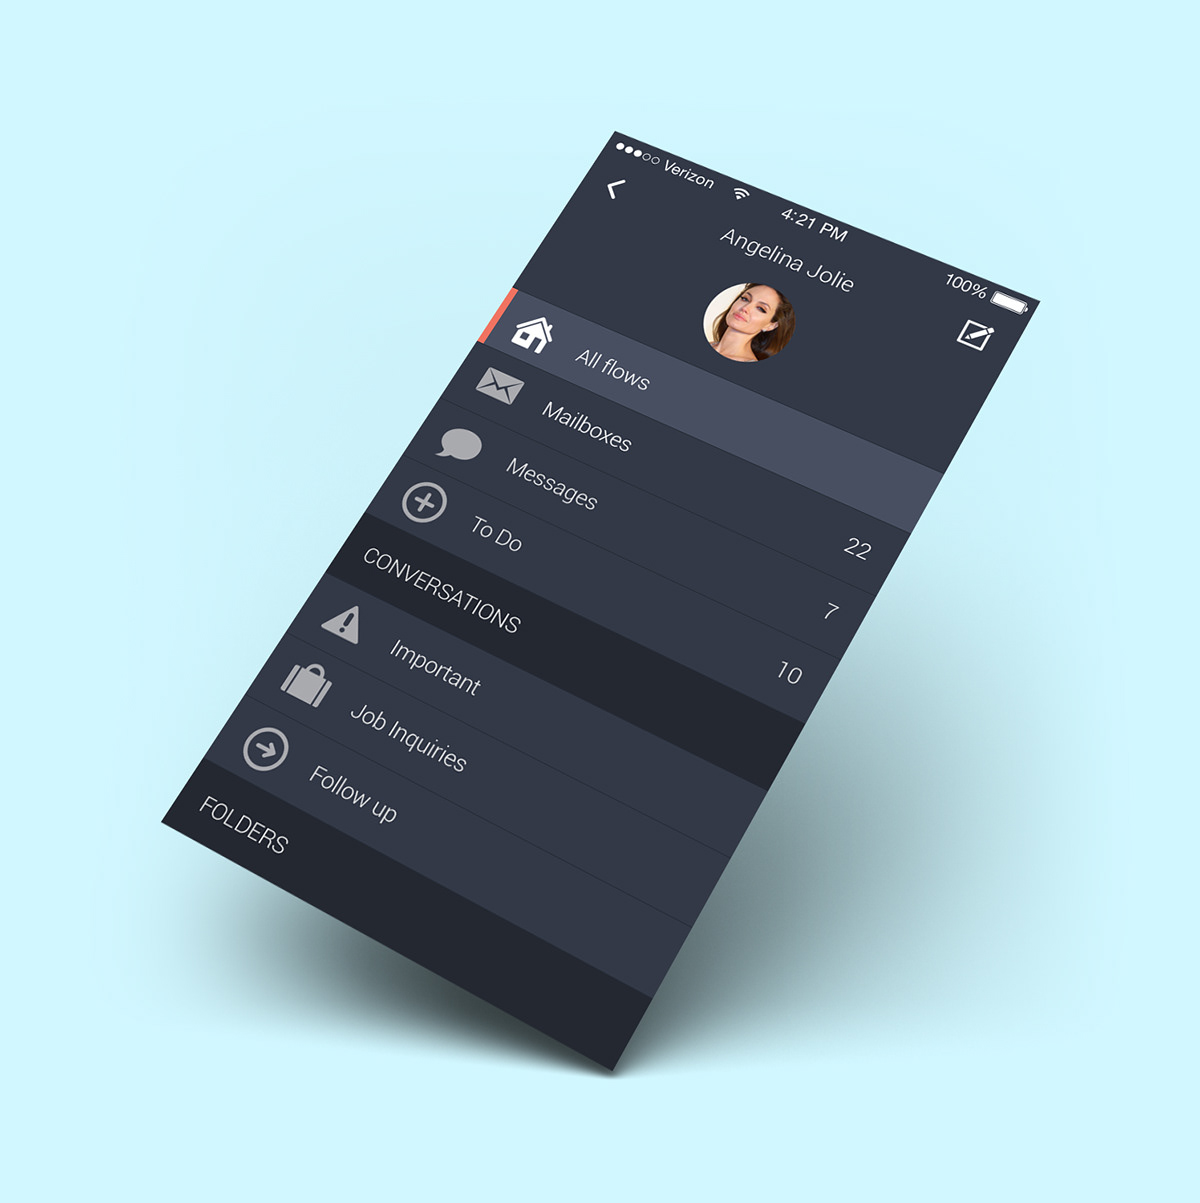 app iphone application design screens flat modern clean Style